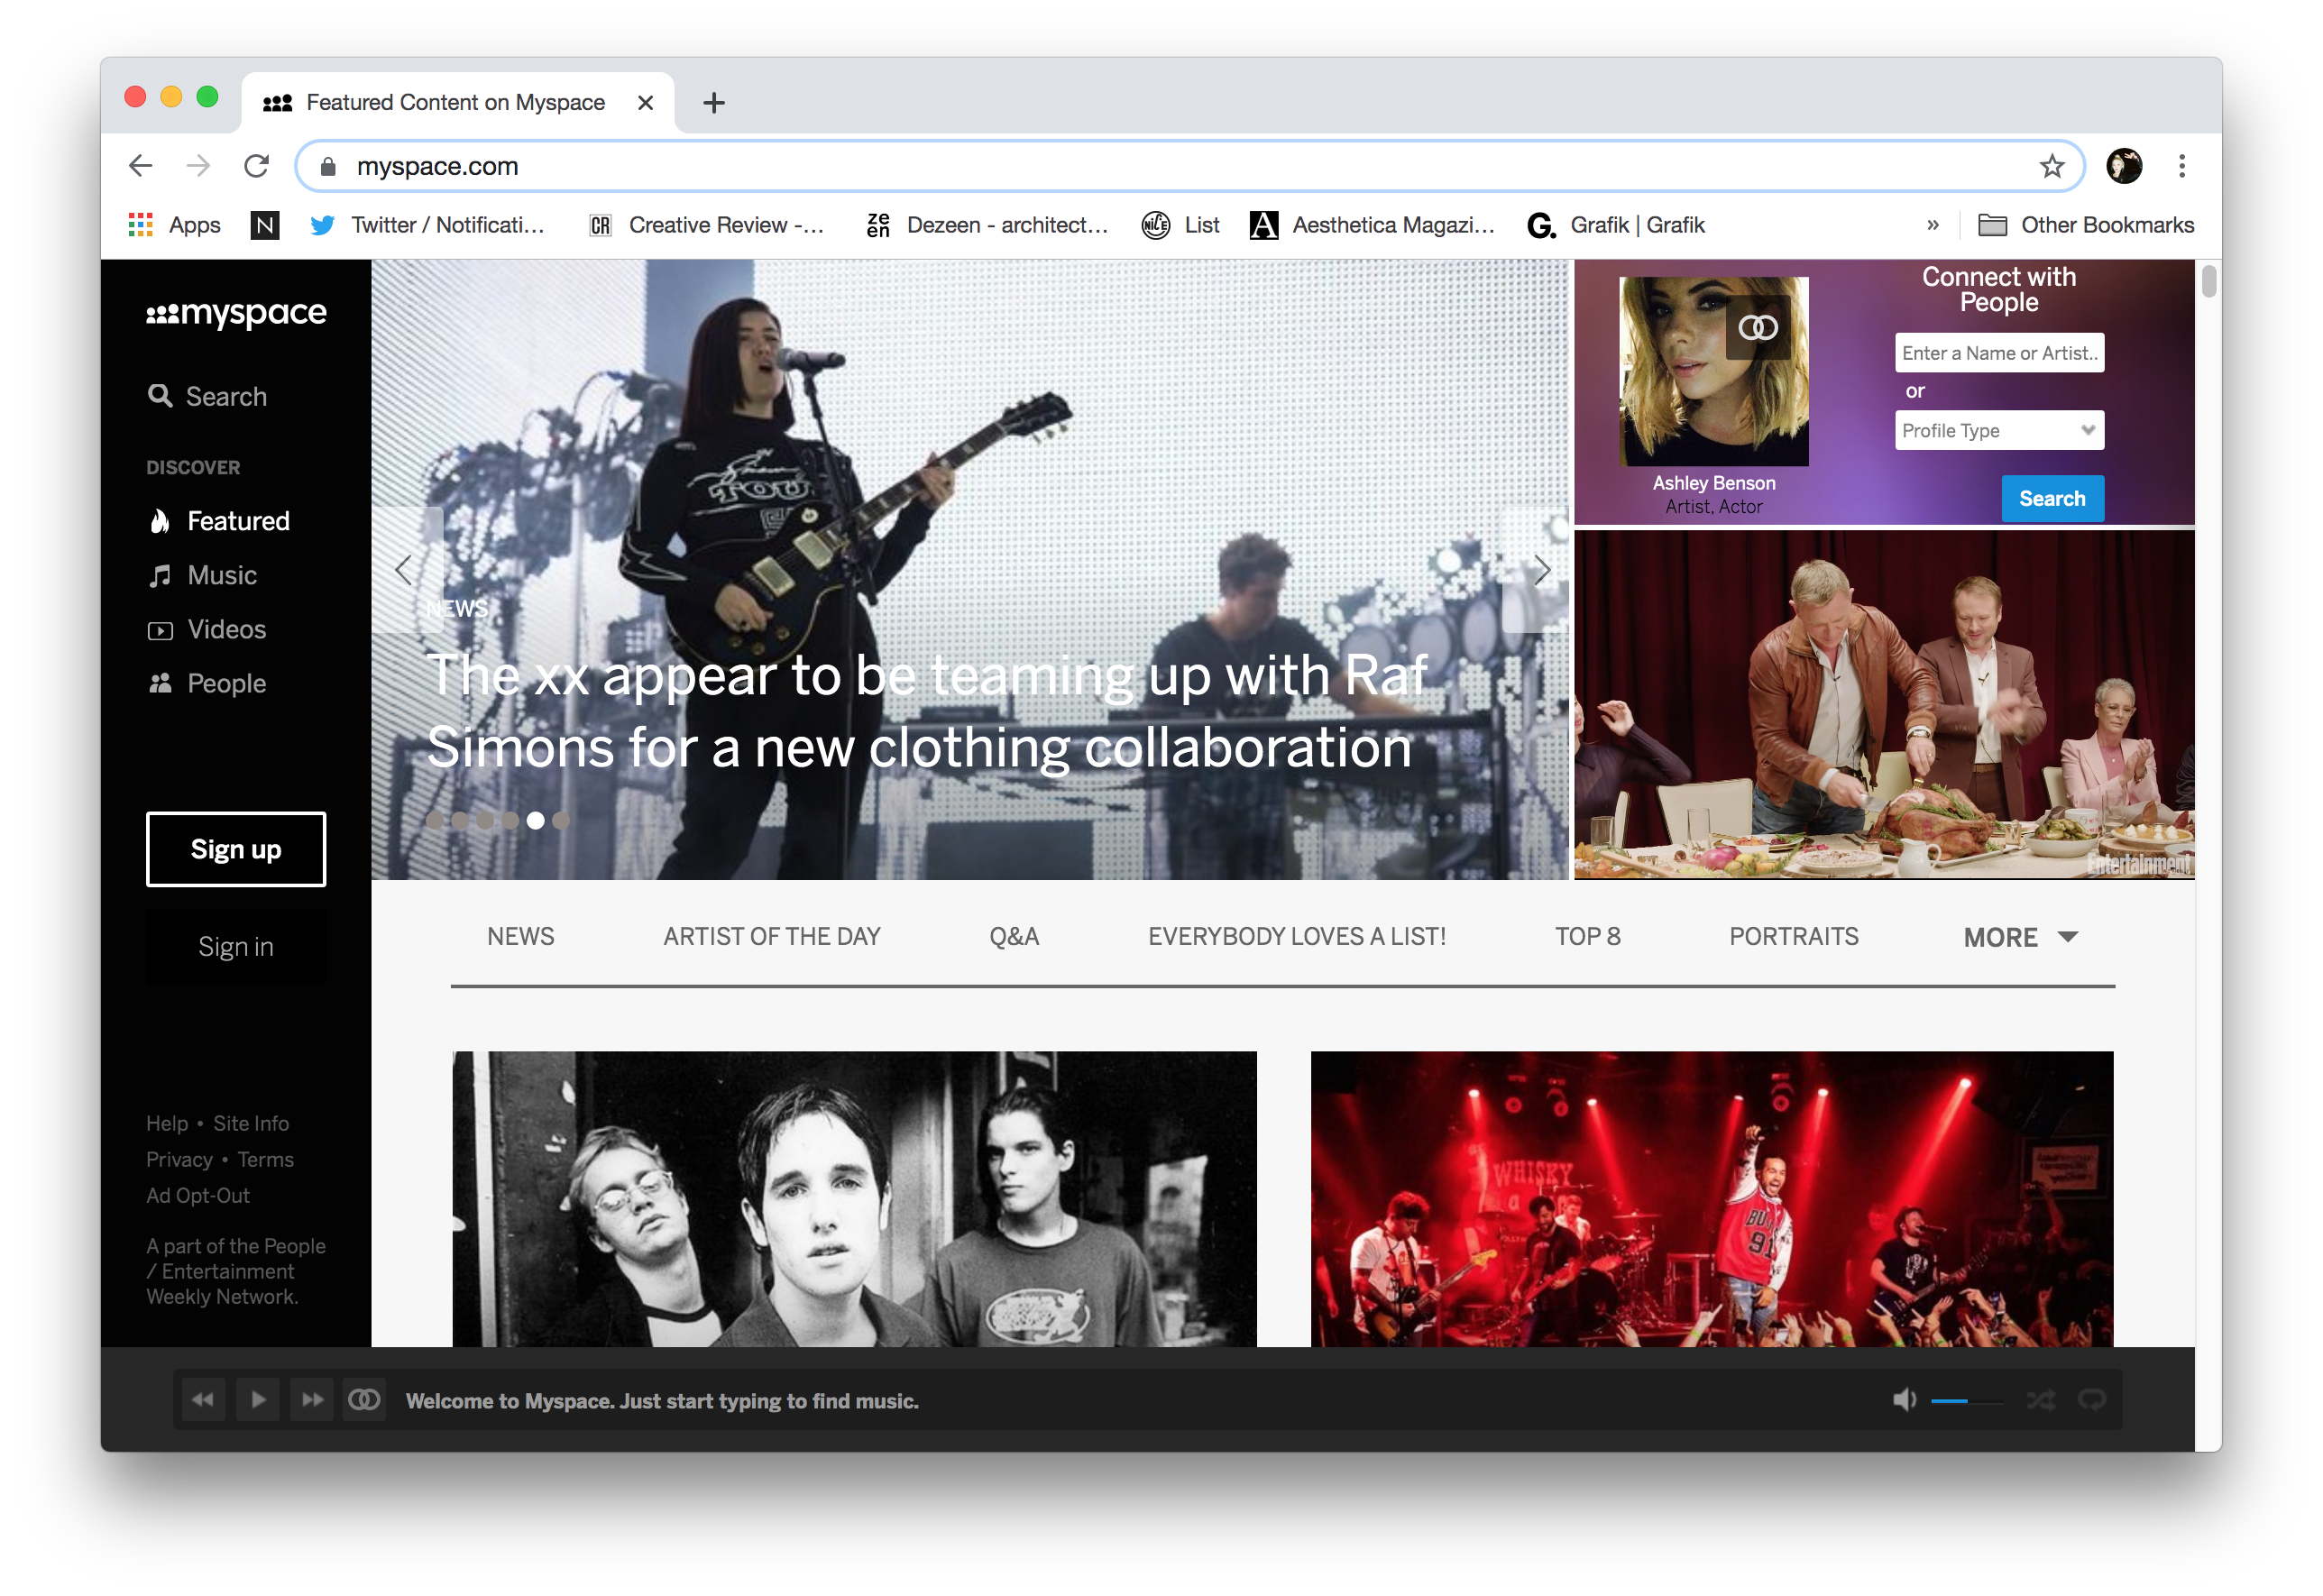 The Myspace homepage, November 2019